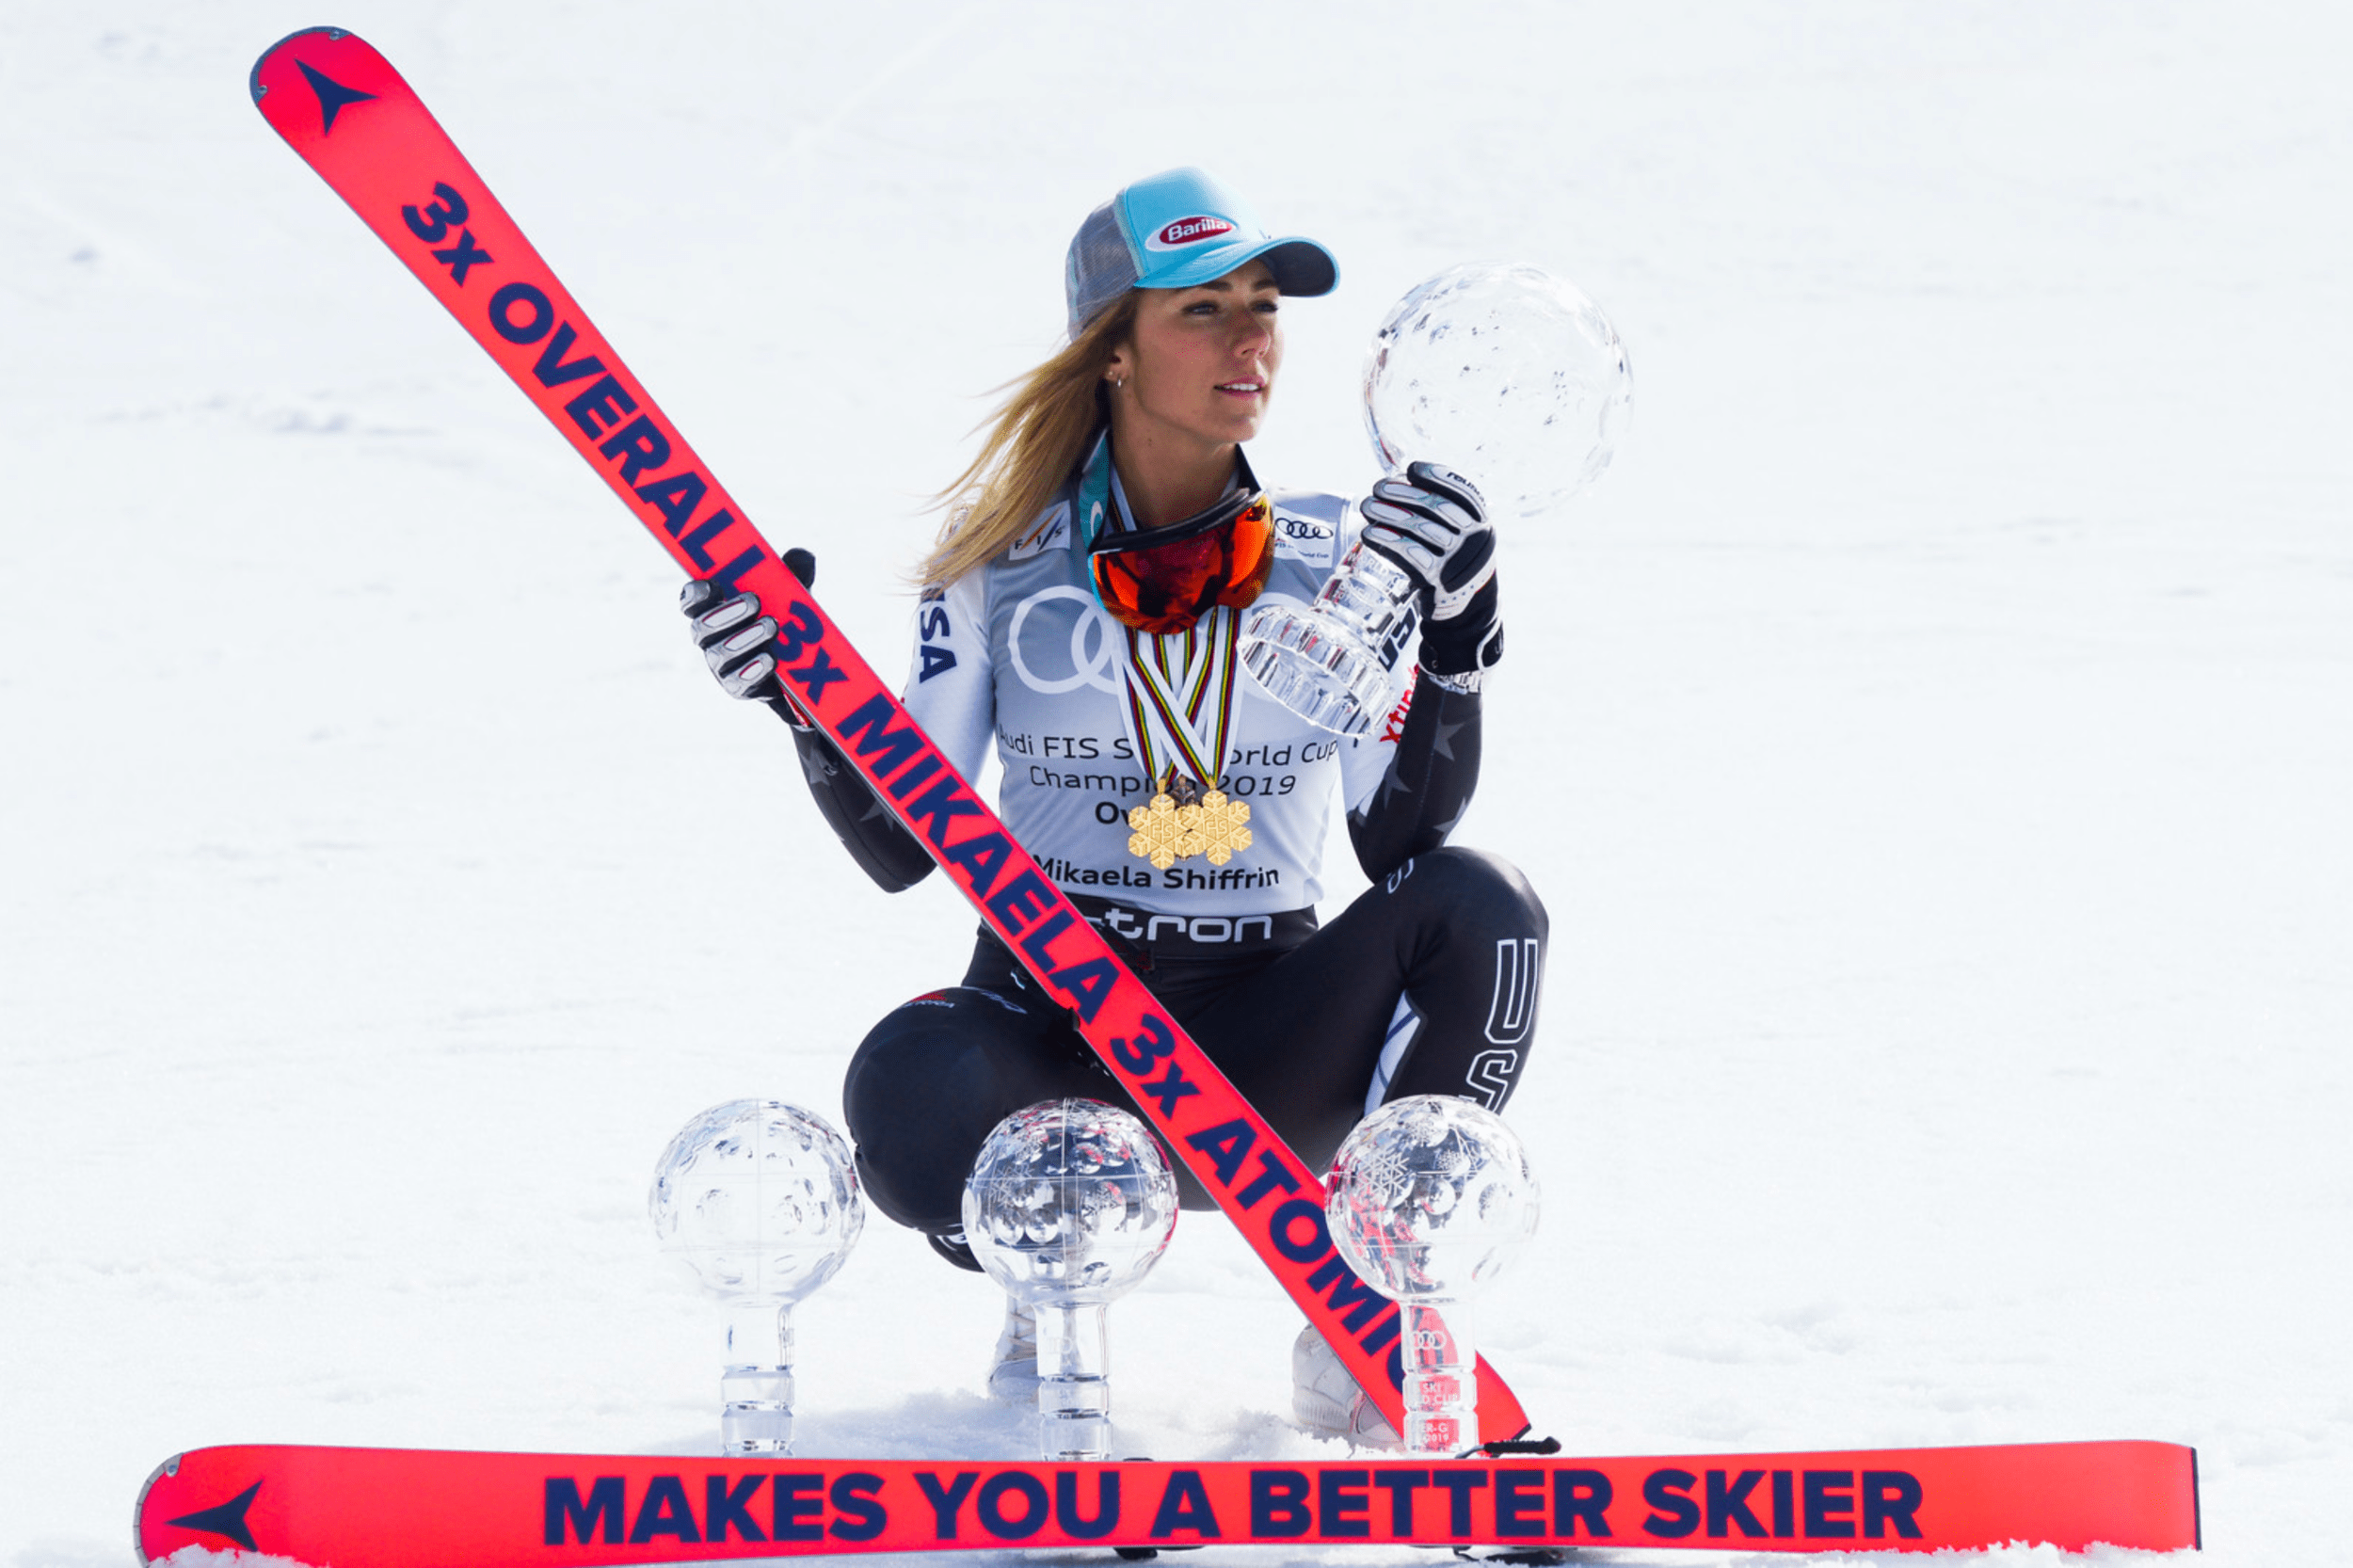 Mikaela Shiffrin is dominating the ski world